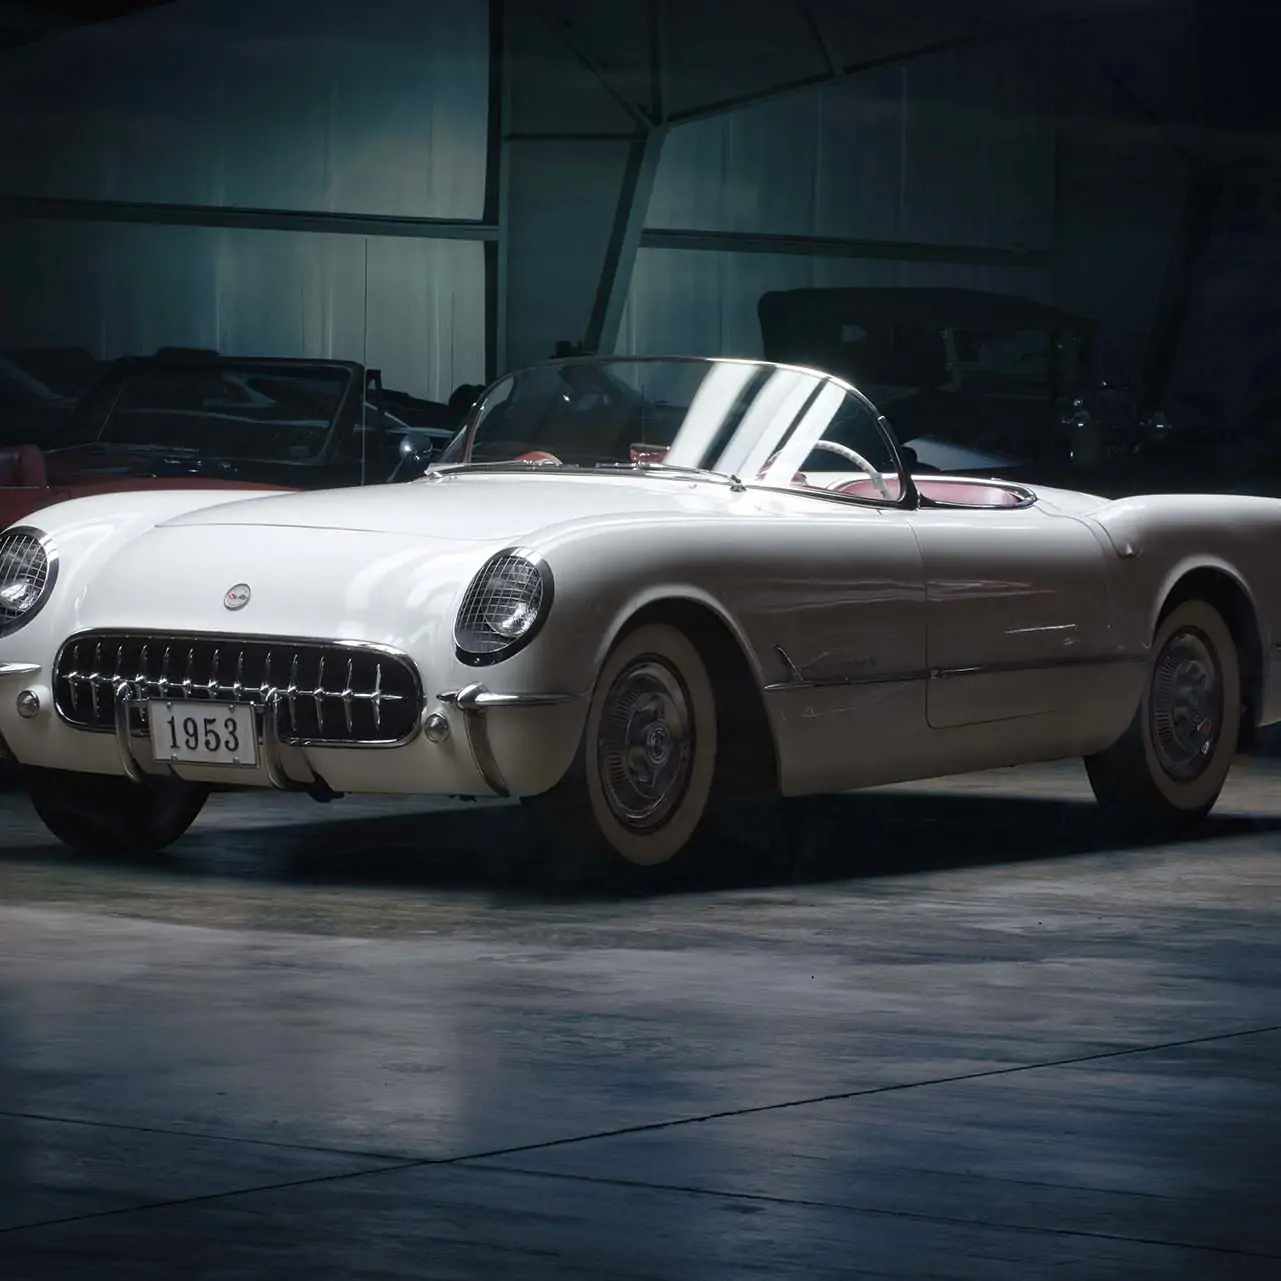 1st Gen 1953 Corvette -Evergreen Classic Automobiles / Dogwood Room - Professional Car Photographer, Automotive Photography